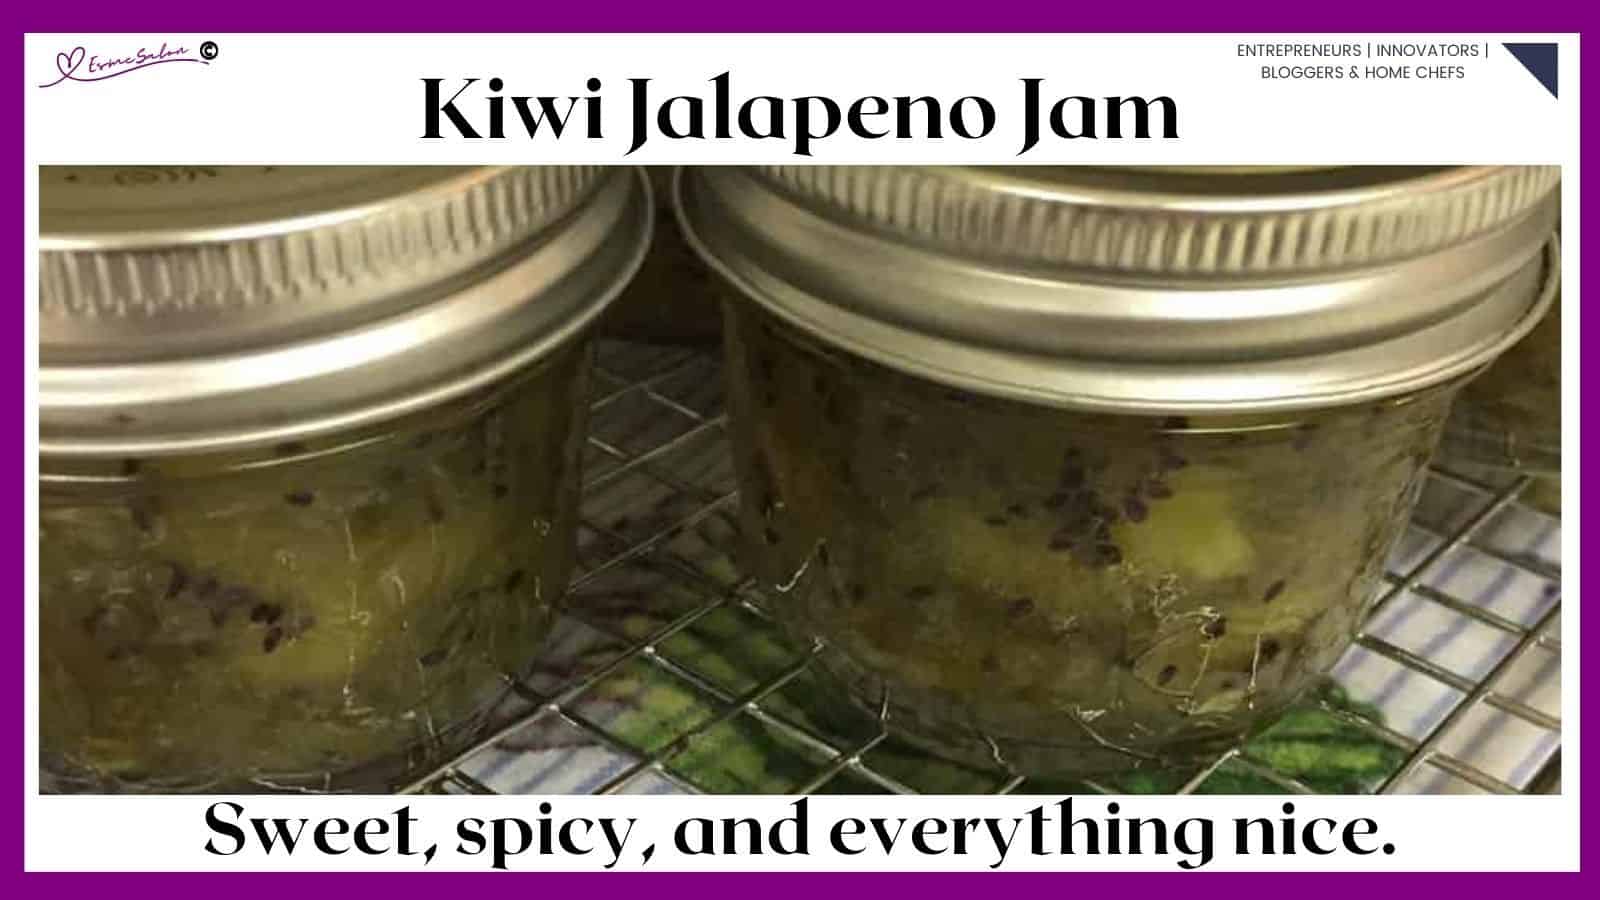 an image of 125ml Console jars filled with Kiwi Jalapeno Jam